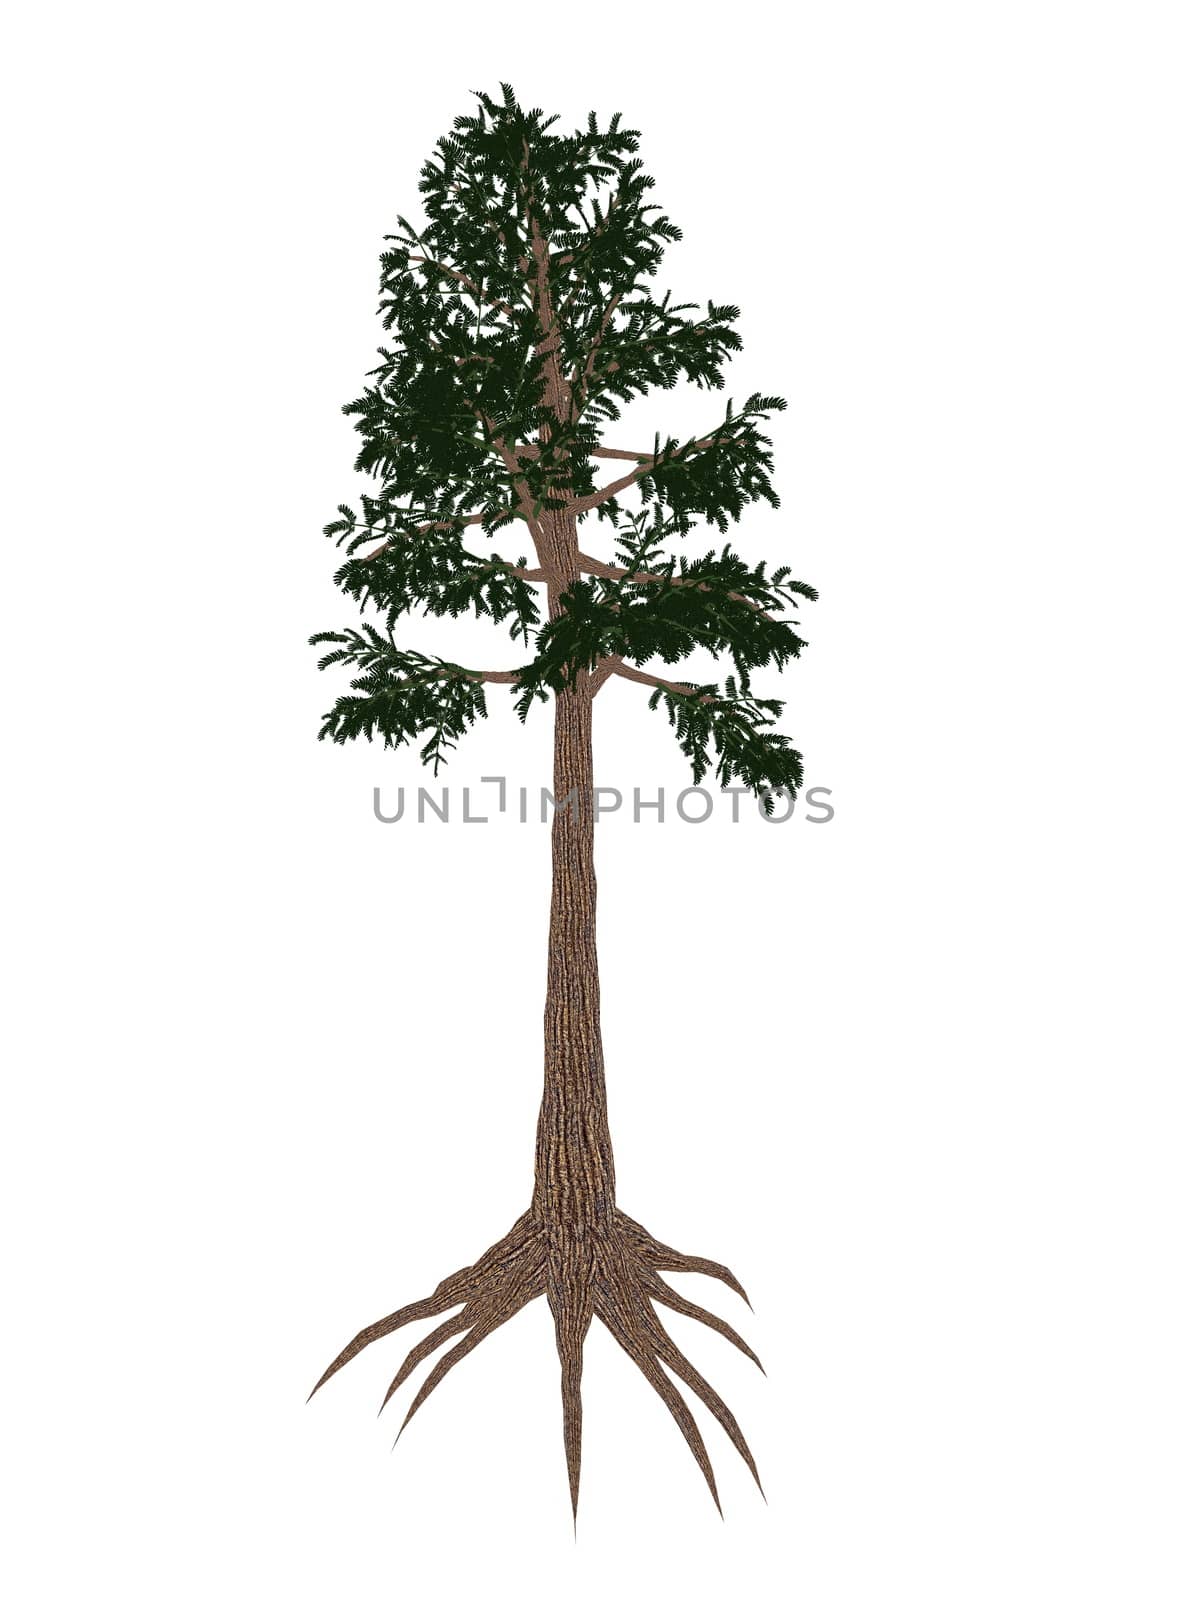 Archaeopteris prehistoric tree - 3D render by Elenaphotos21